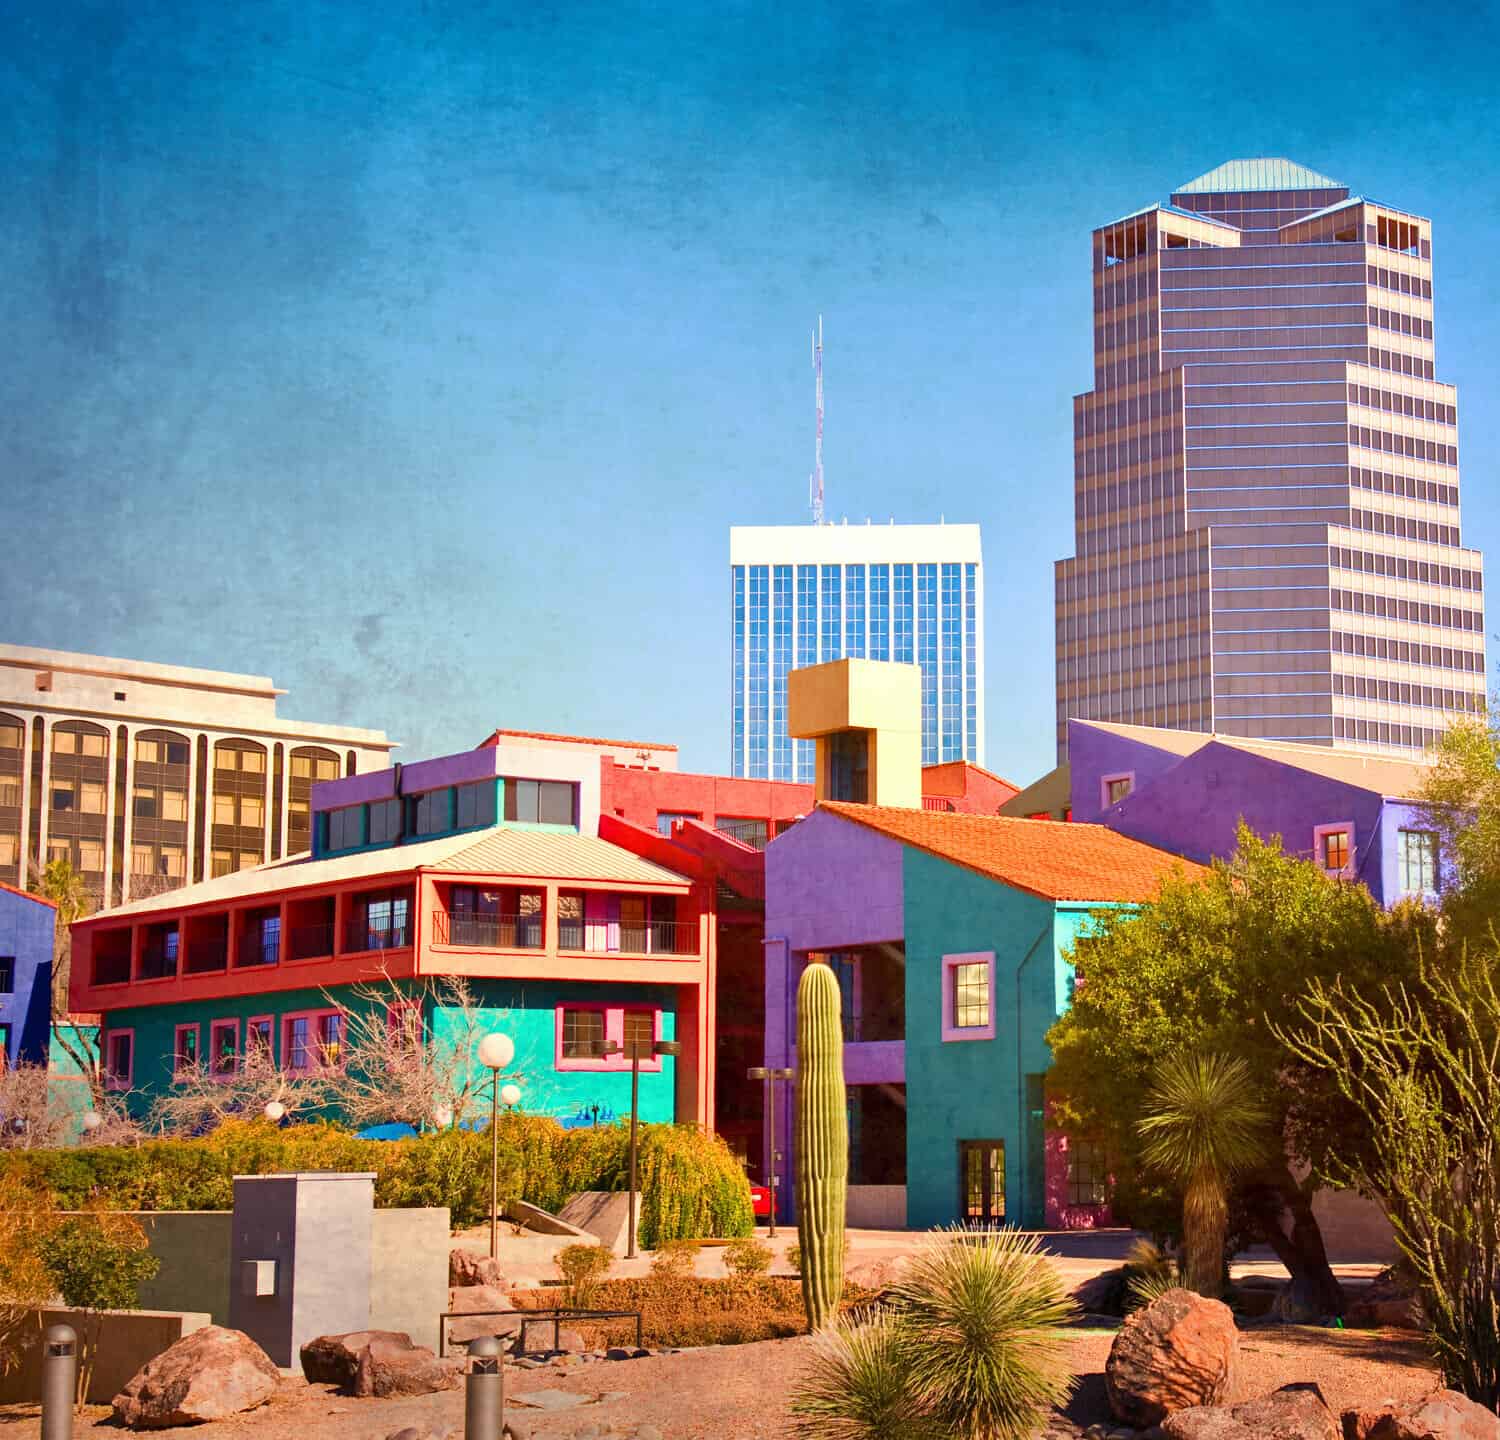 Downtown Tucson, Arizona with la Placita